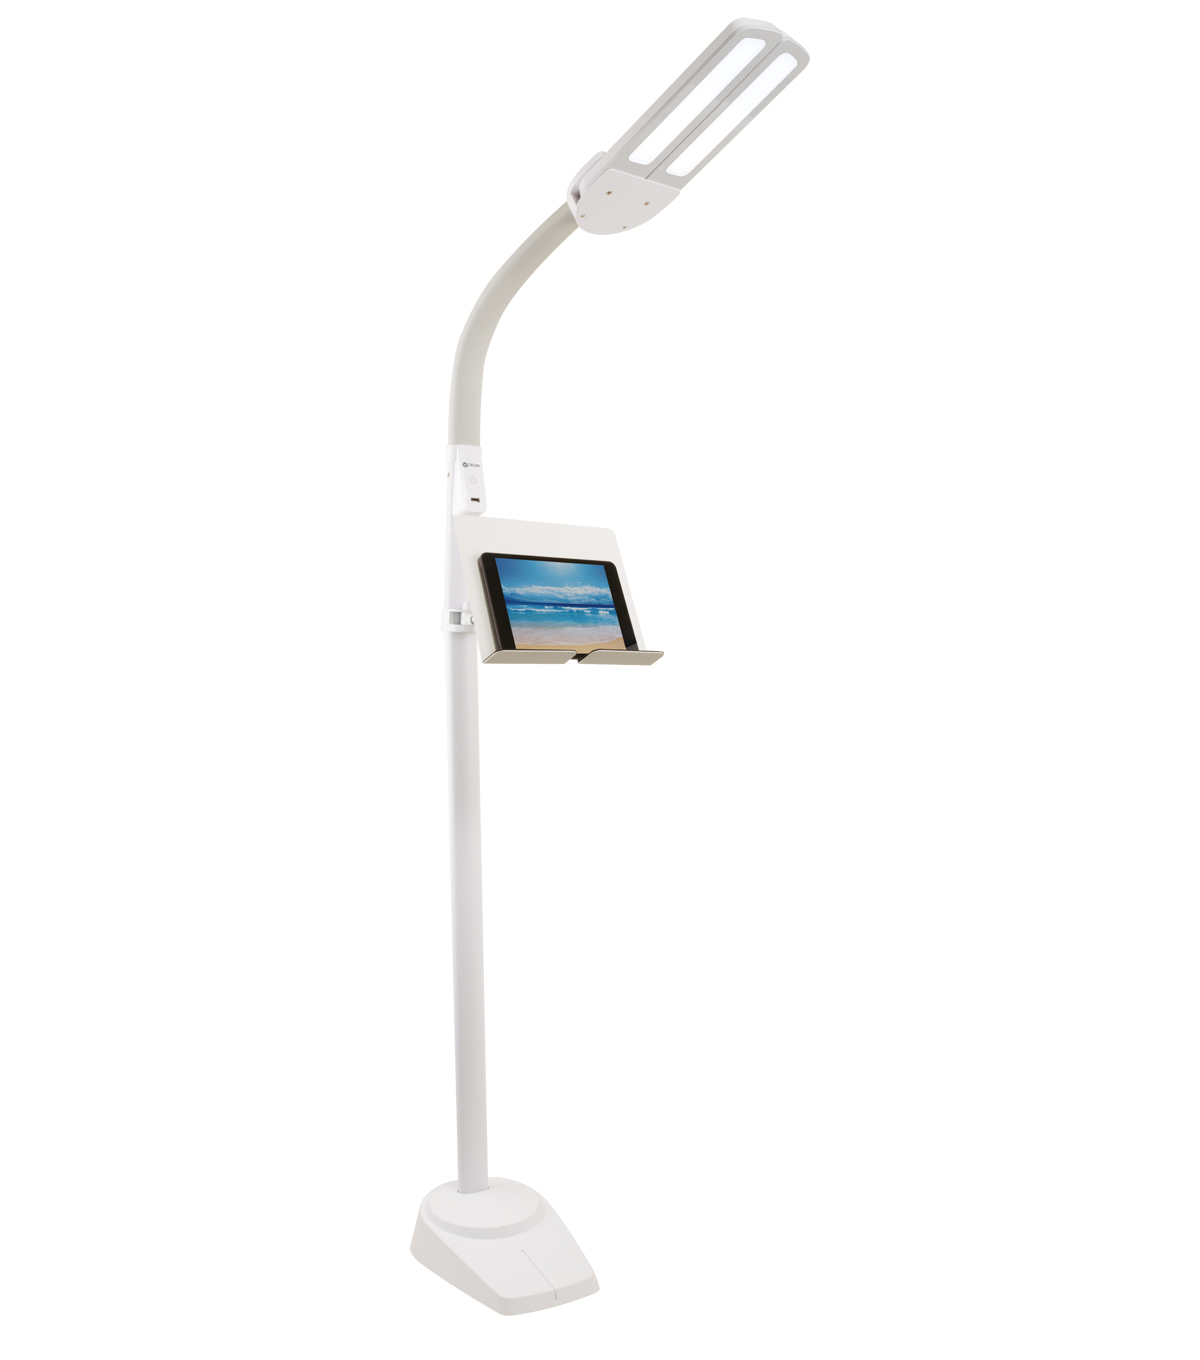 Ottlite Dual Shade Led Floor Lamp With Usb Charging Station White within sizing 1200 X 1360